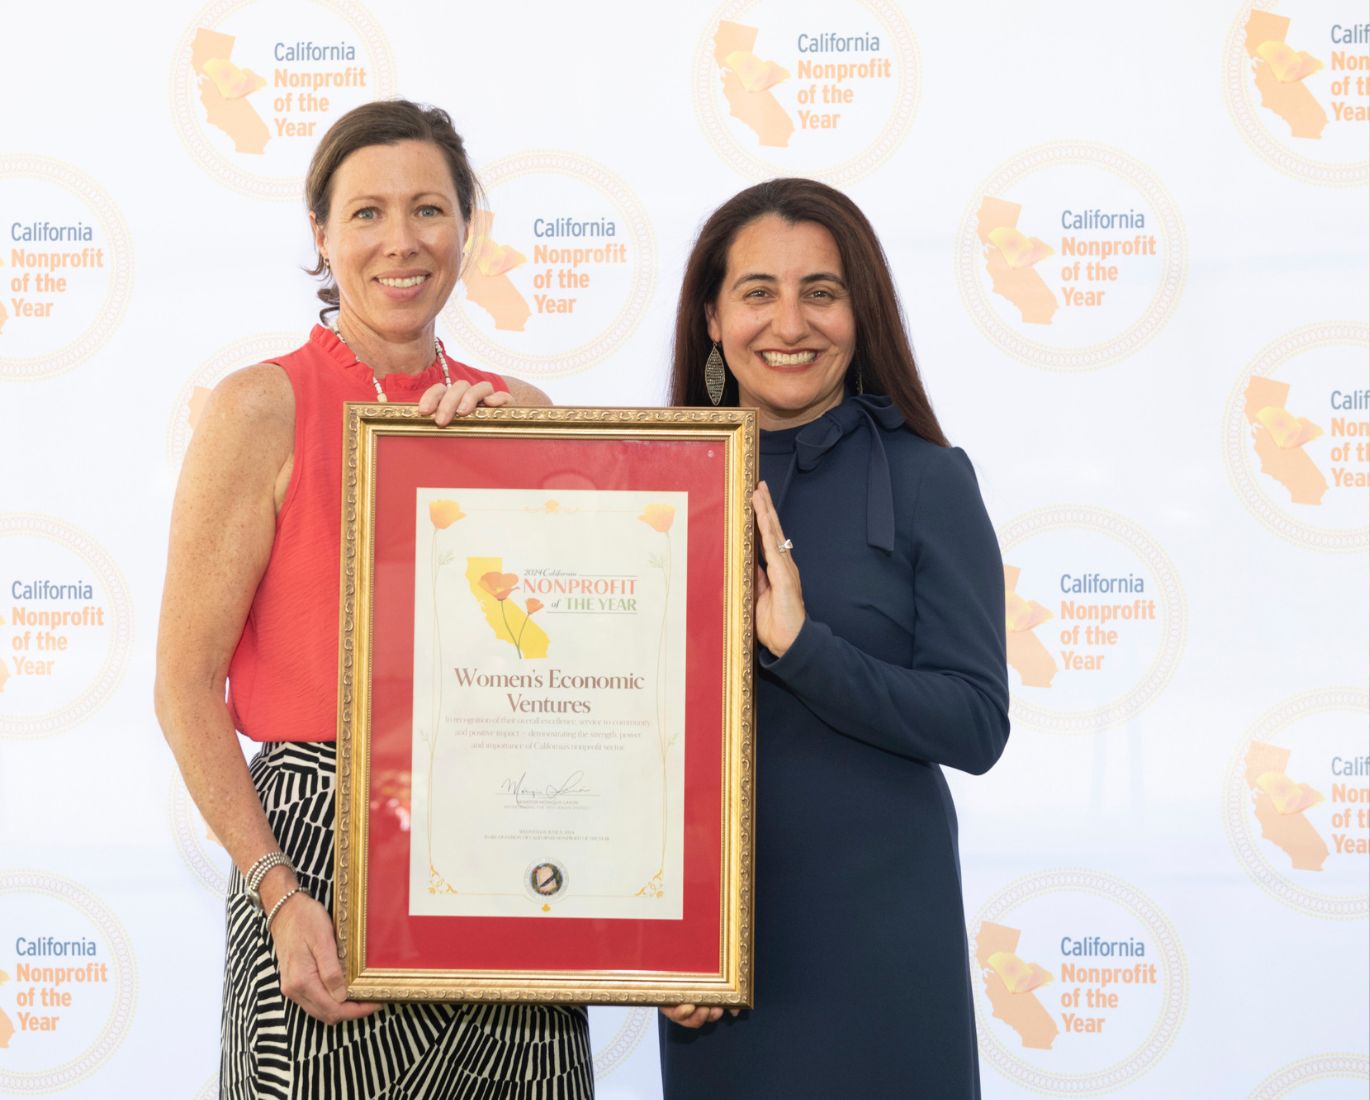 WEV CEO Nicki Parr Receiving Award from State Senator Limón